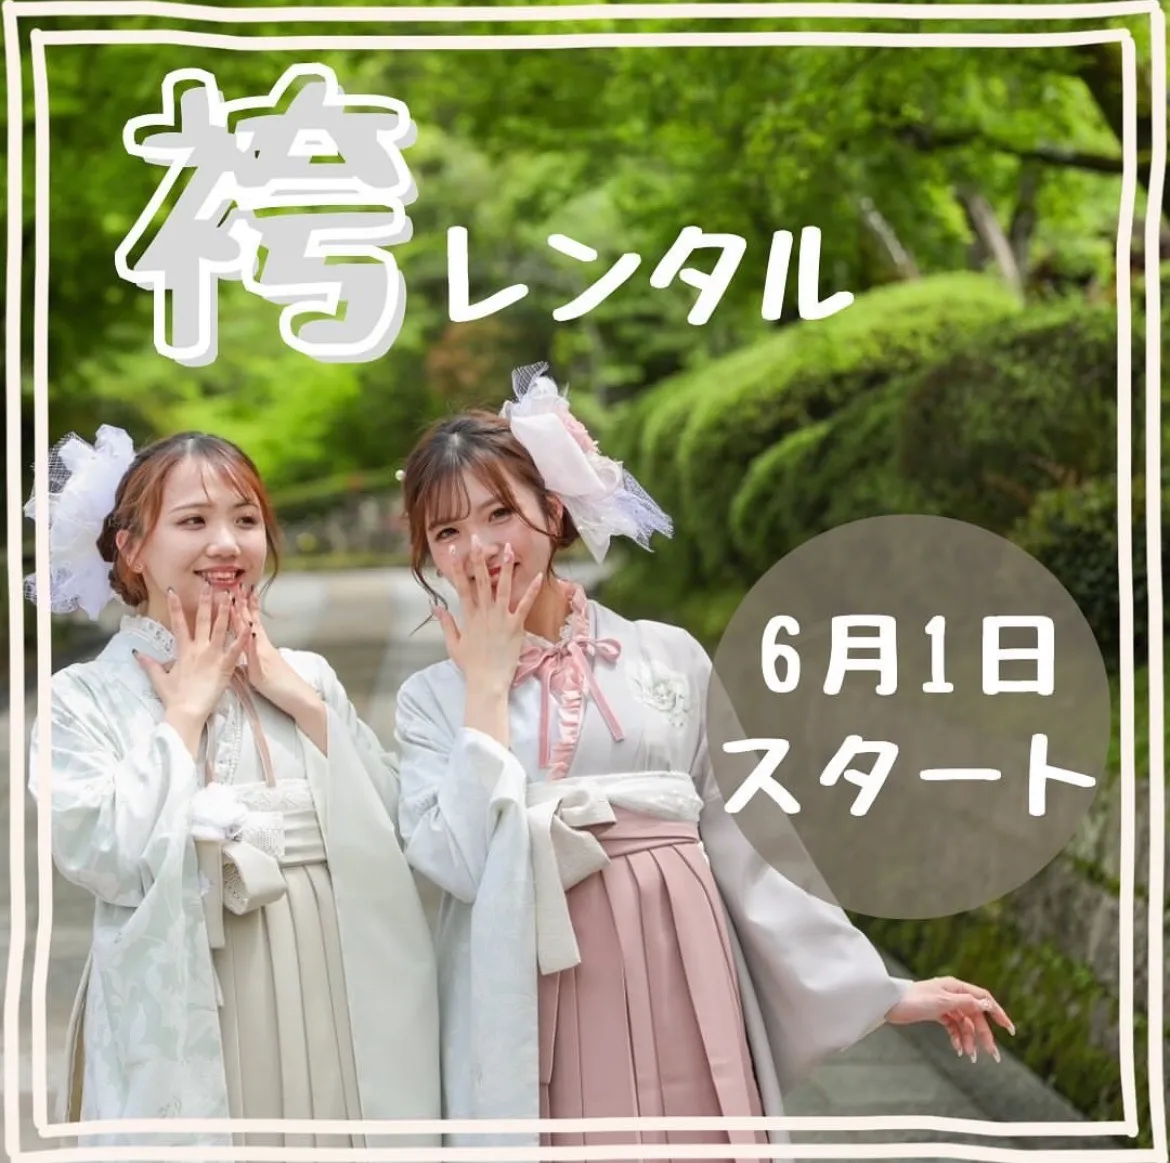 【TAKAZEN奈良店】3日♡6月1日からスタートするかわいい袴のご案内です♡